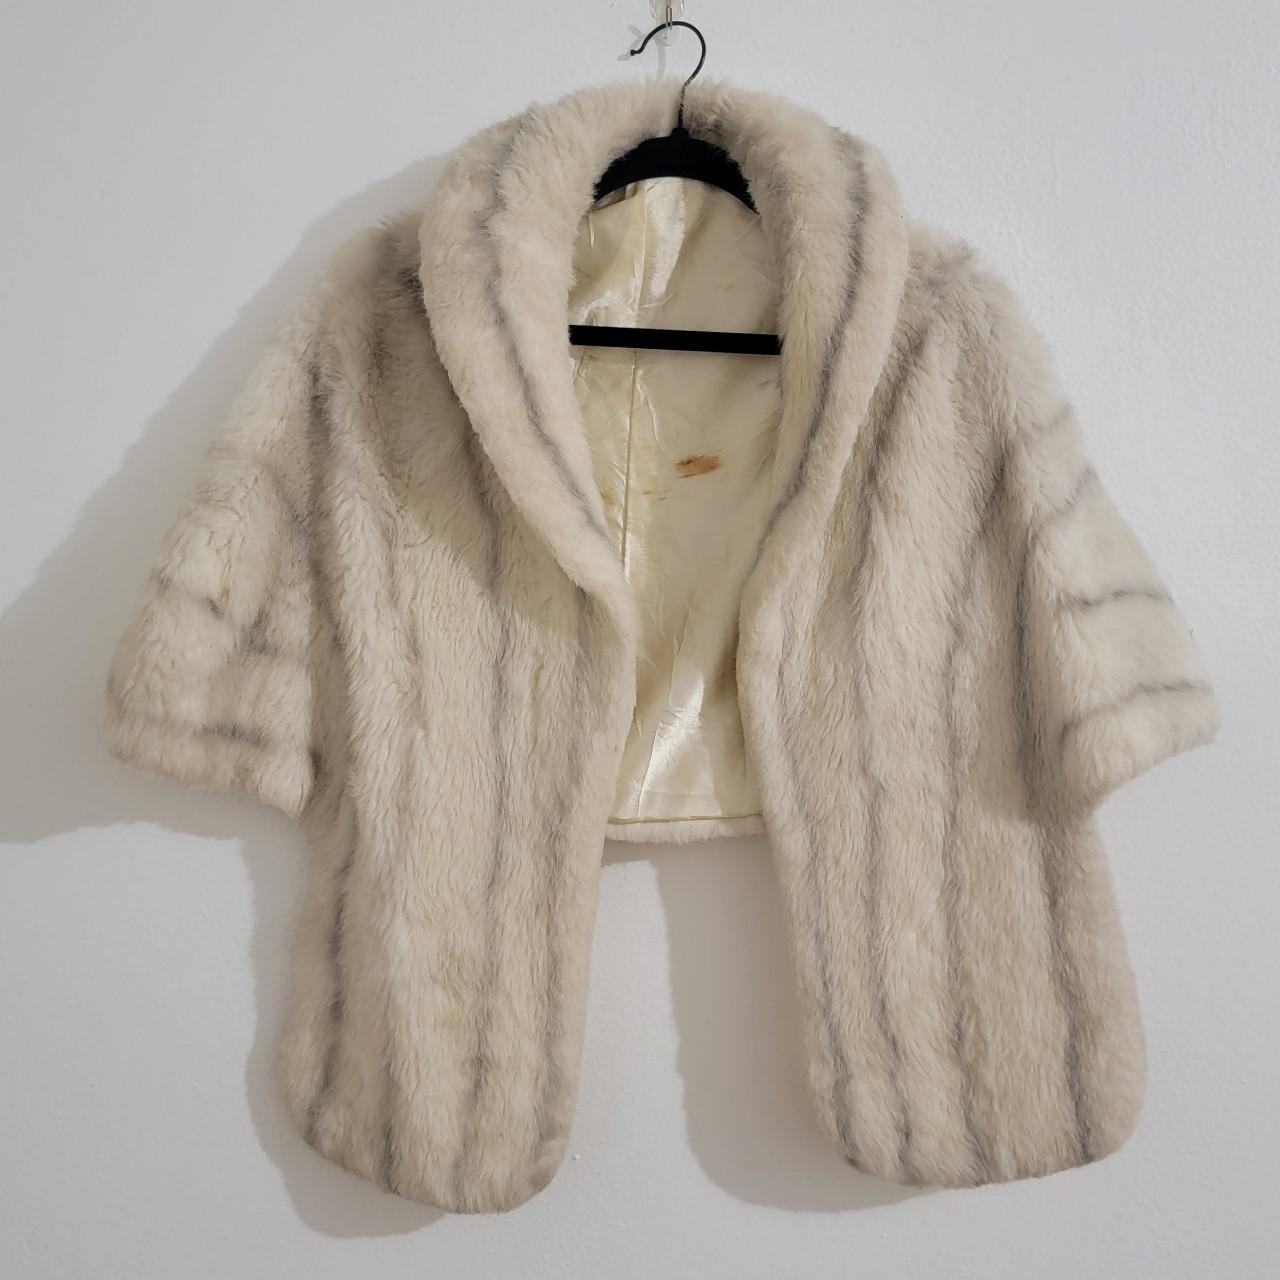 1950s Vintage Faux Fur Sleeved Cape Coat Sweet... - Depop